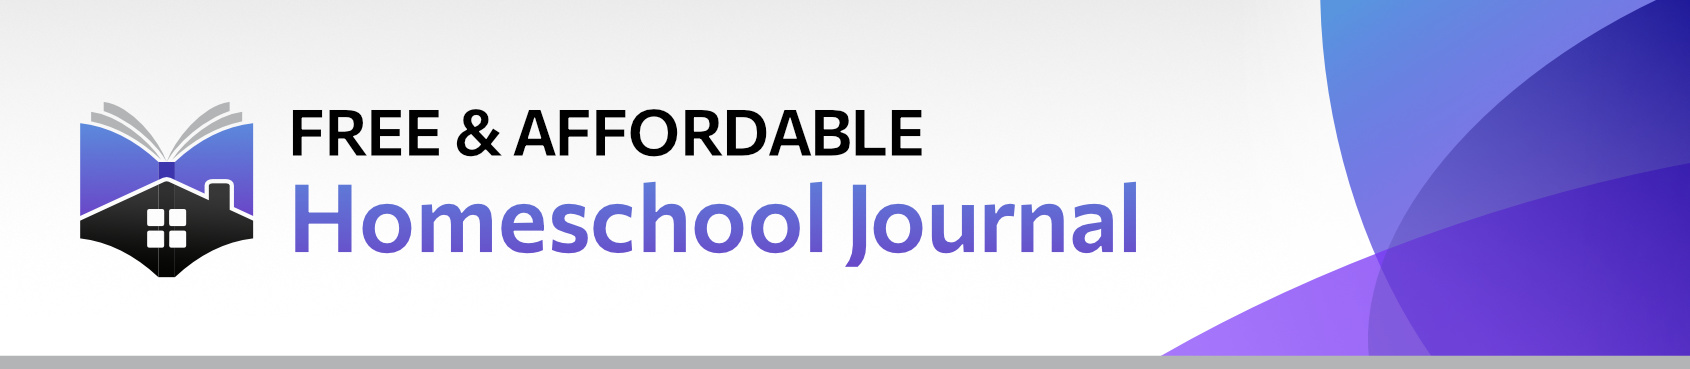 Free and Affordible Homeschool Journal.jpg